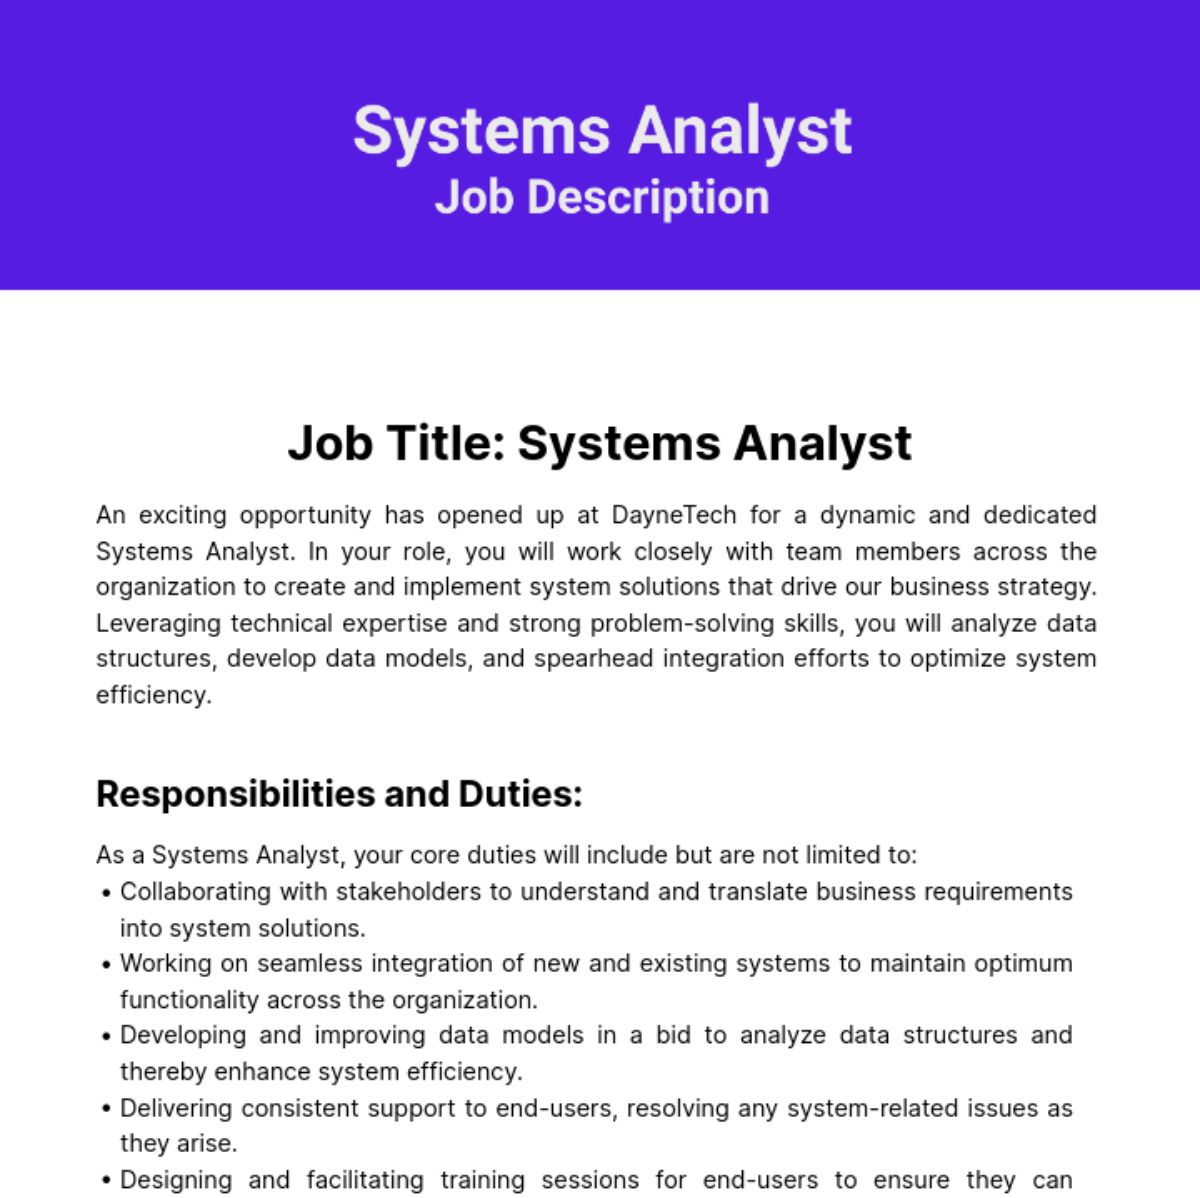 Systems Analyst Job Description Template